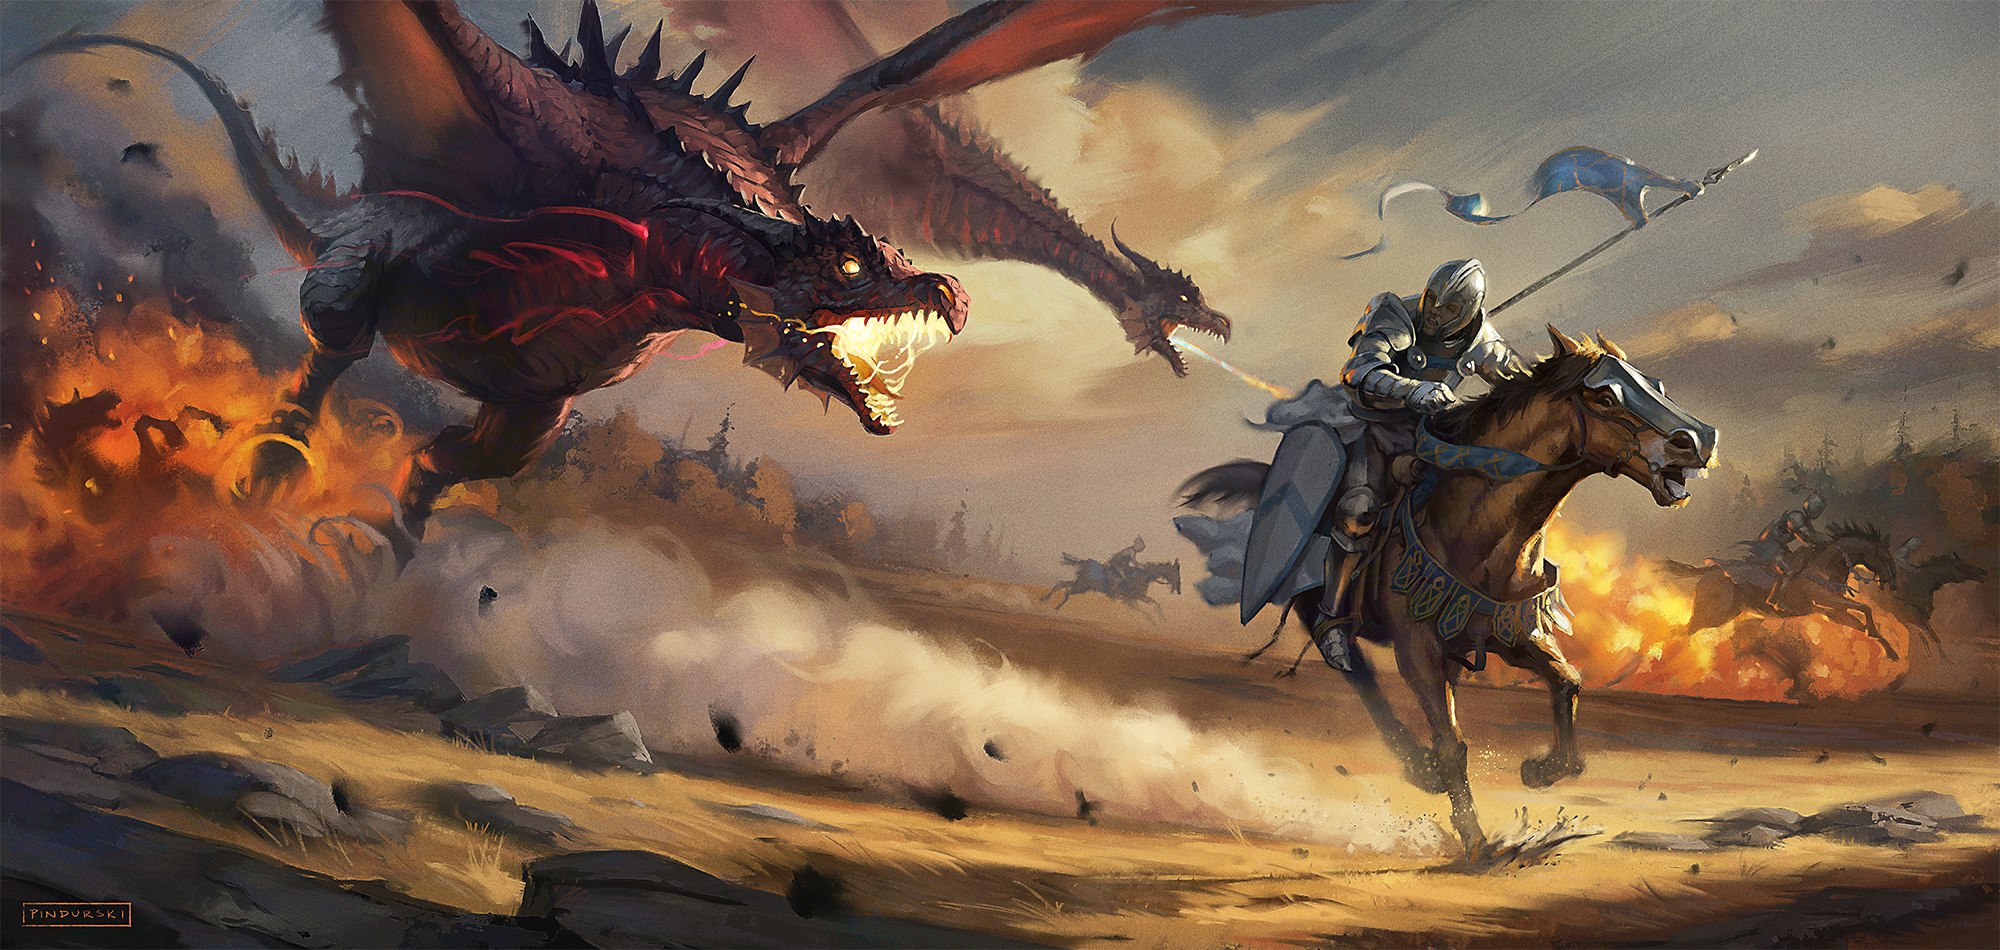 General 2000x950 digital art warrior knight flag horse dragon war fantasy art giant